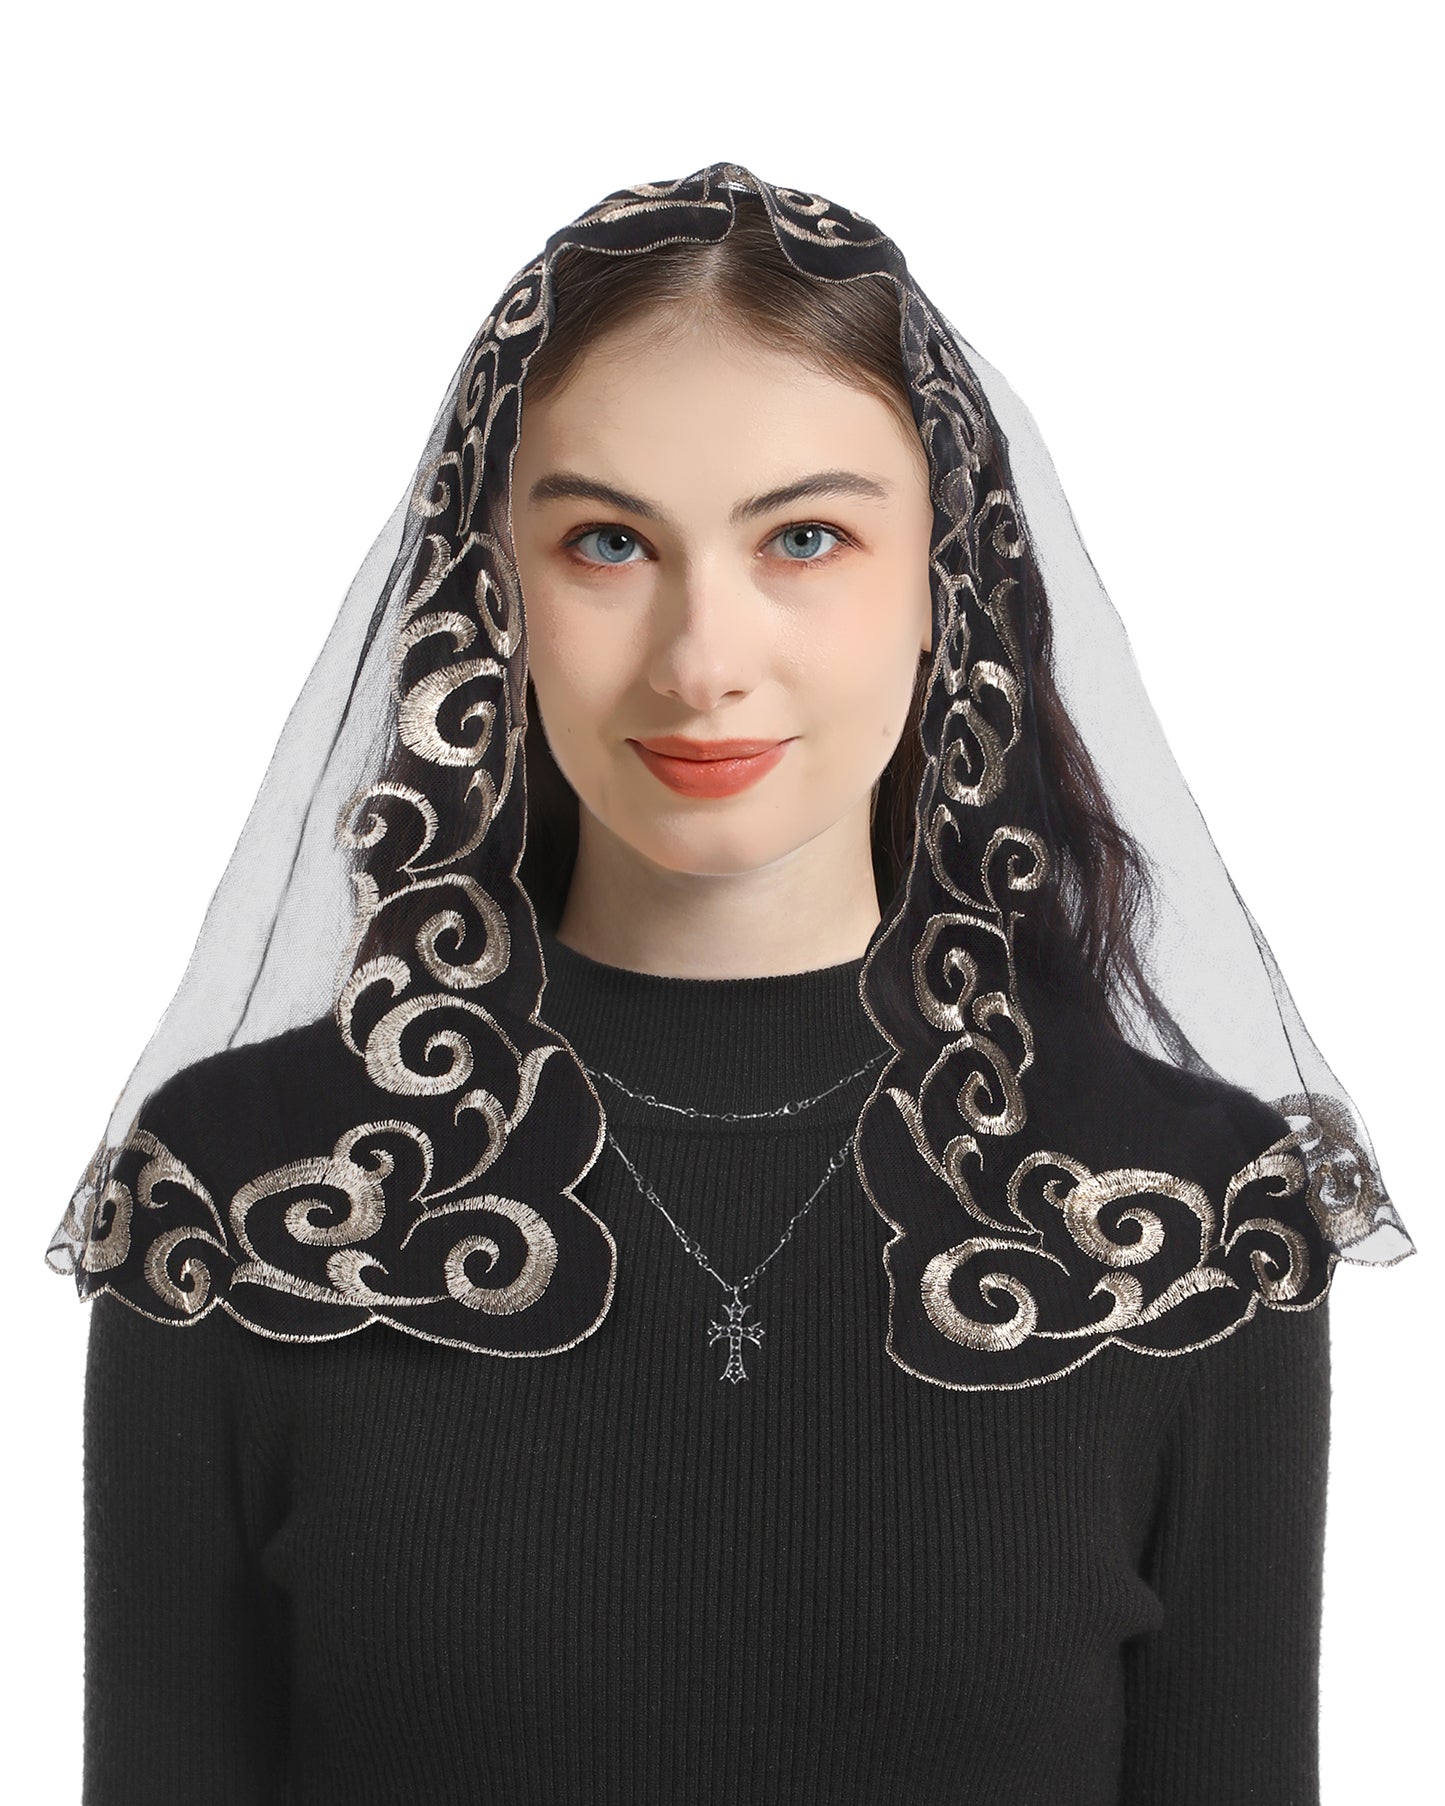 Bozidol Church Veil Catholic Mass Headband - Cross Embroidery Lace D Shape Headpiece Floral Church Veil